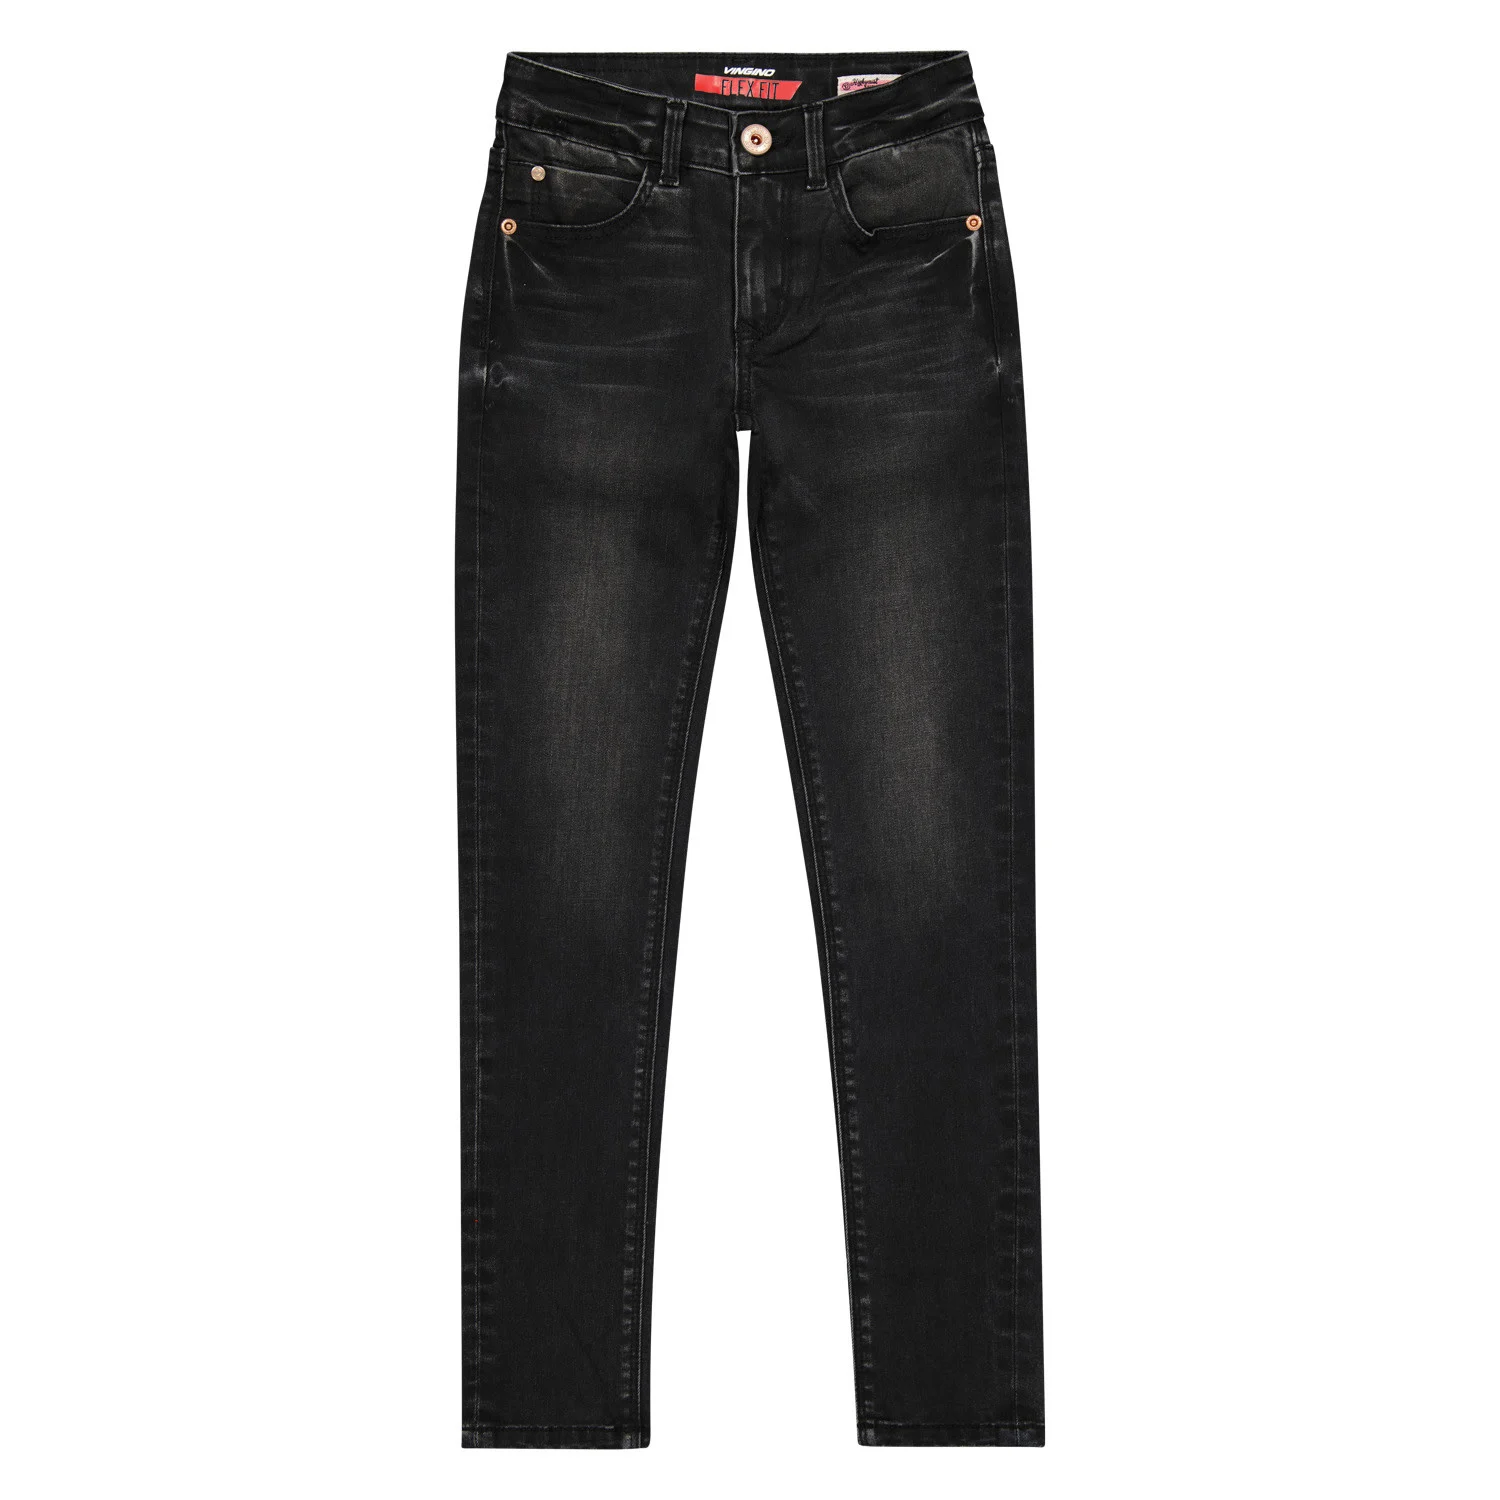 Afbeelding van Vingino Meiden jeans super skinny highwaist betty black vintage